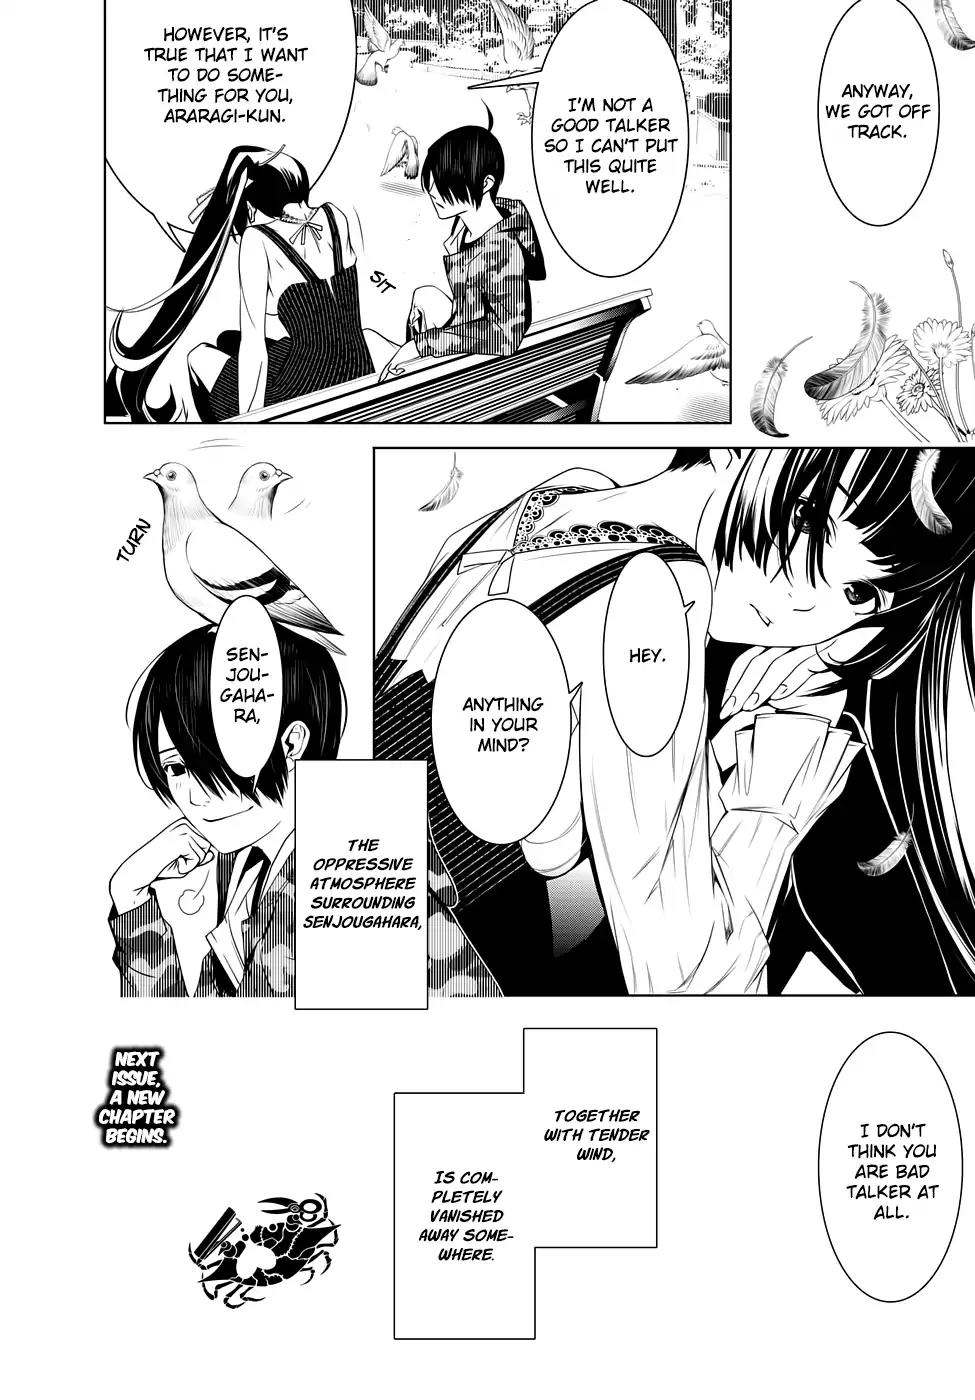 Bakemonogatari (Nishio Ishin) Vol.1 Chapter 5